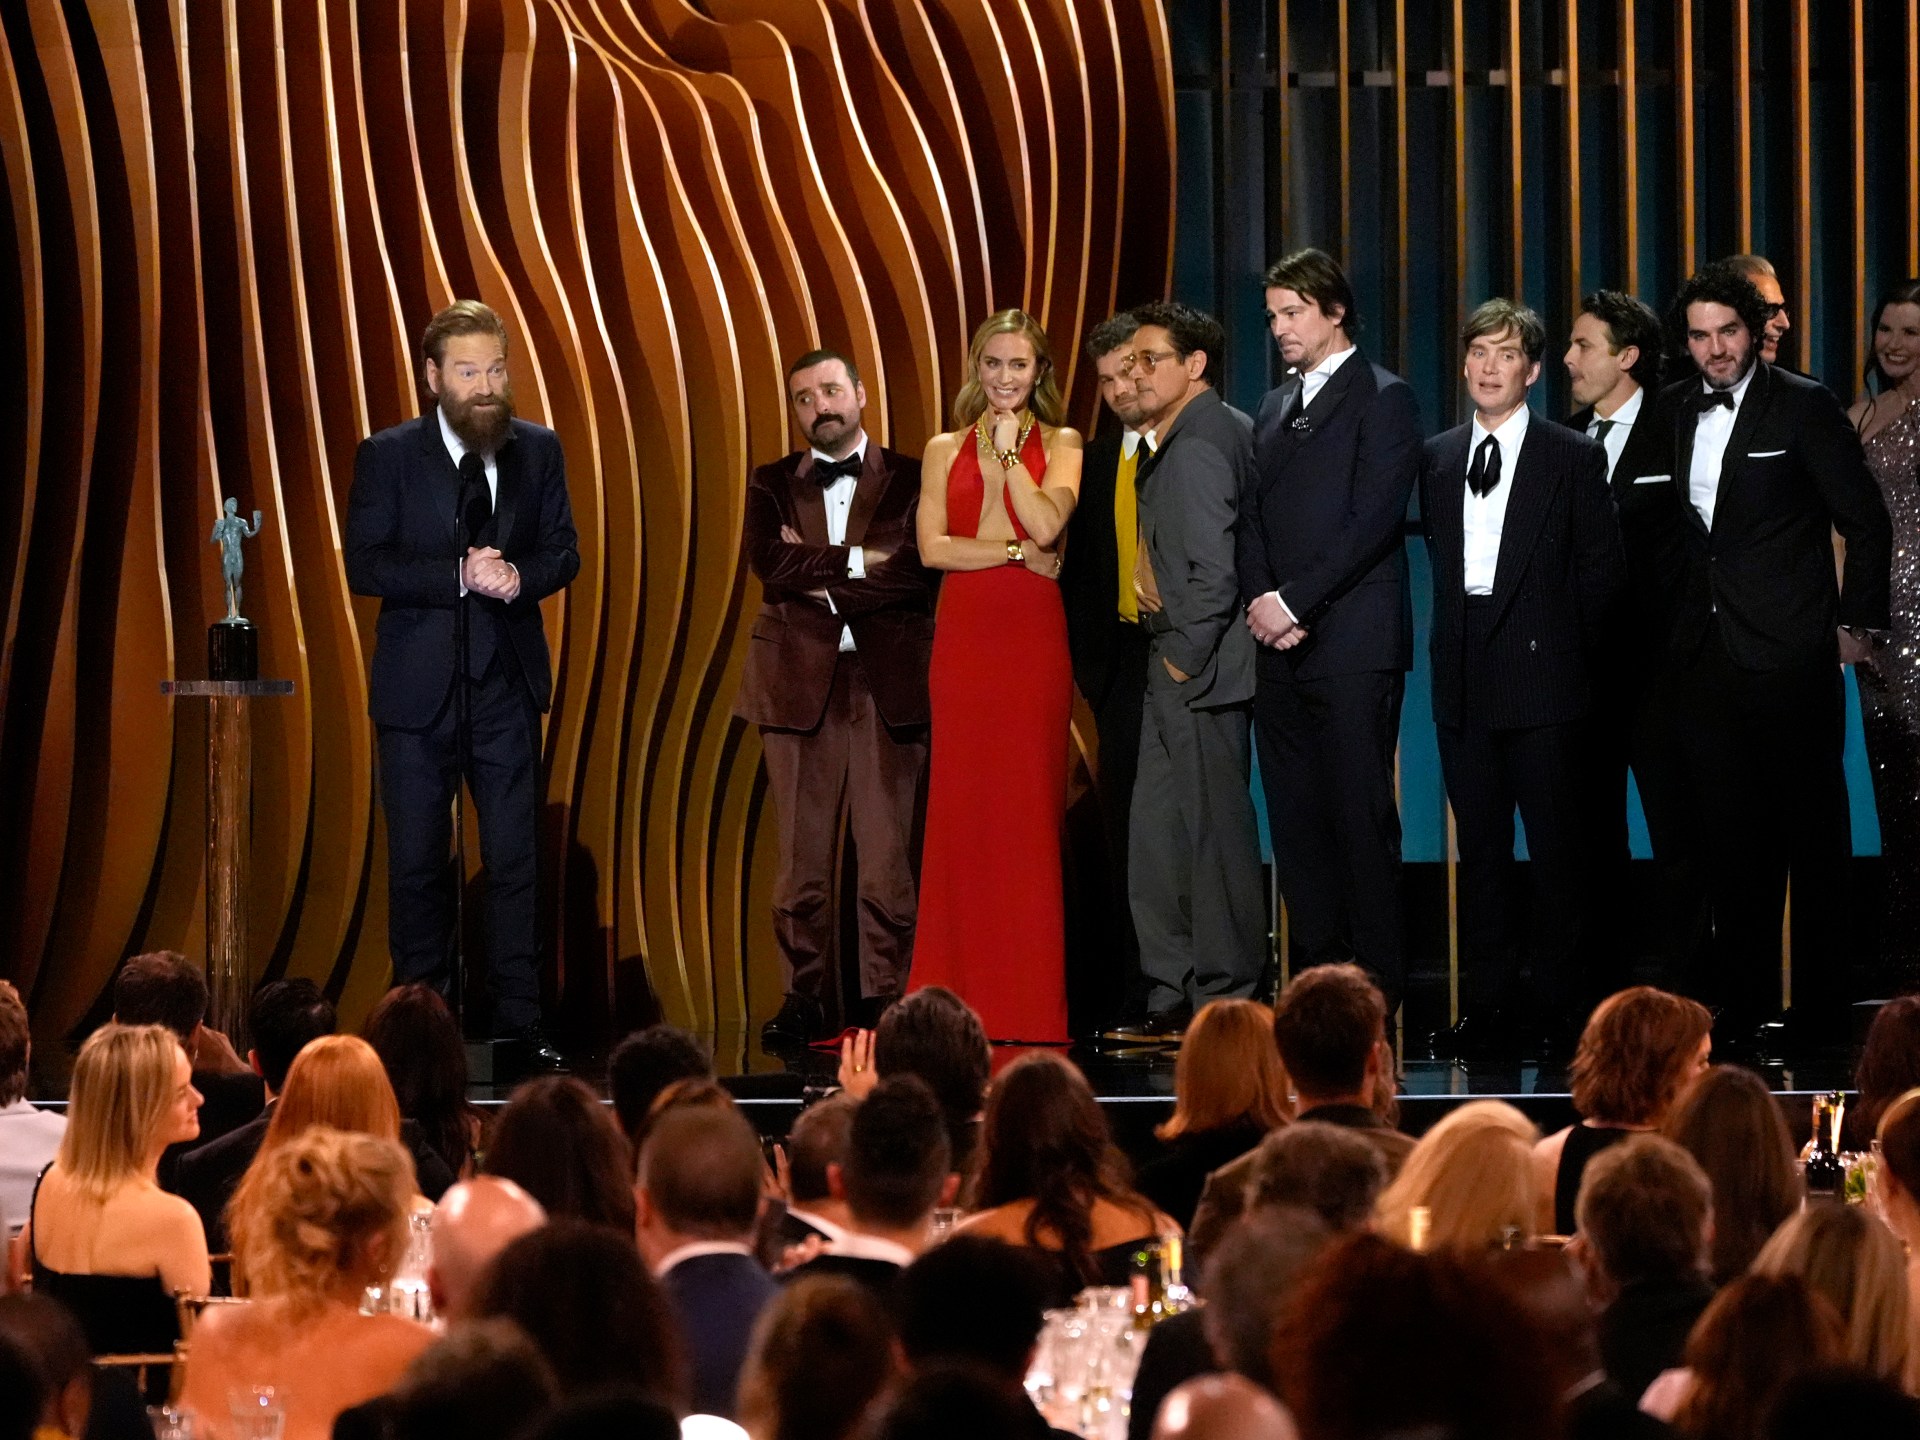 Oppenheimer wins big at Screen Actors Guild Awards, boosting Oscar hopes | Entertainment News